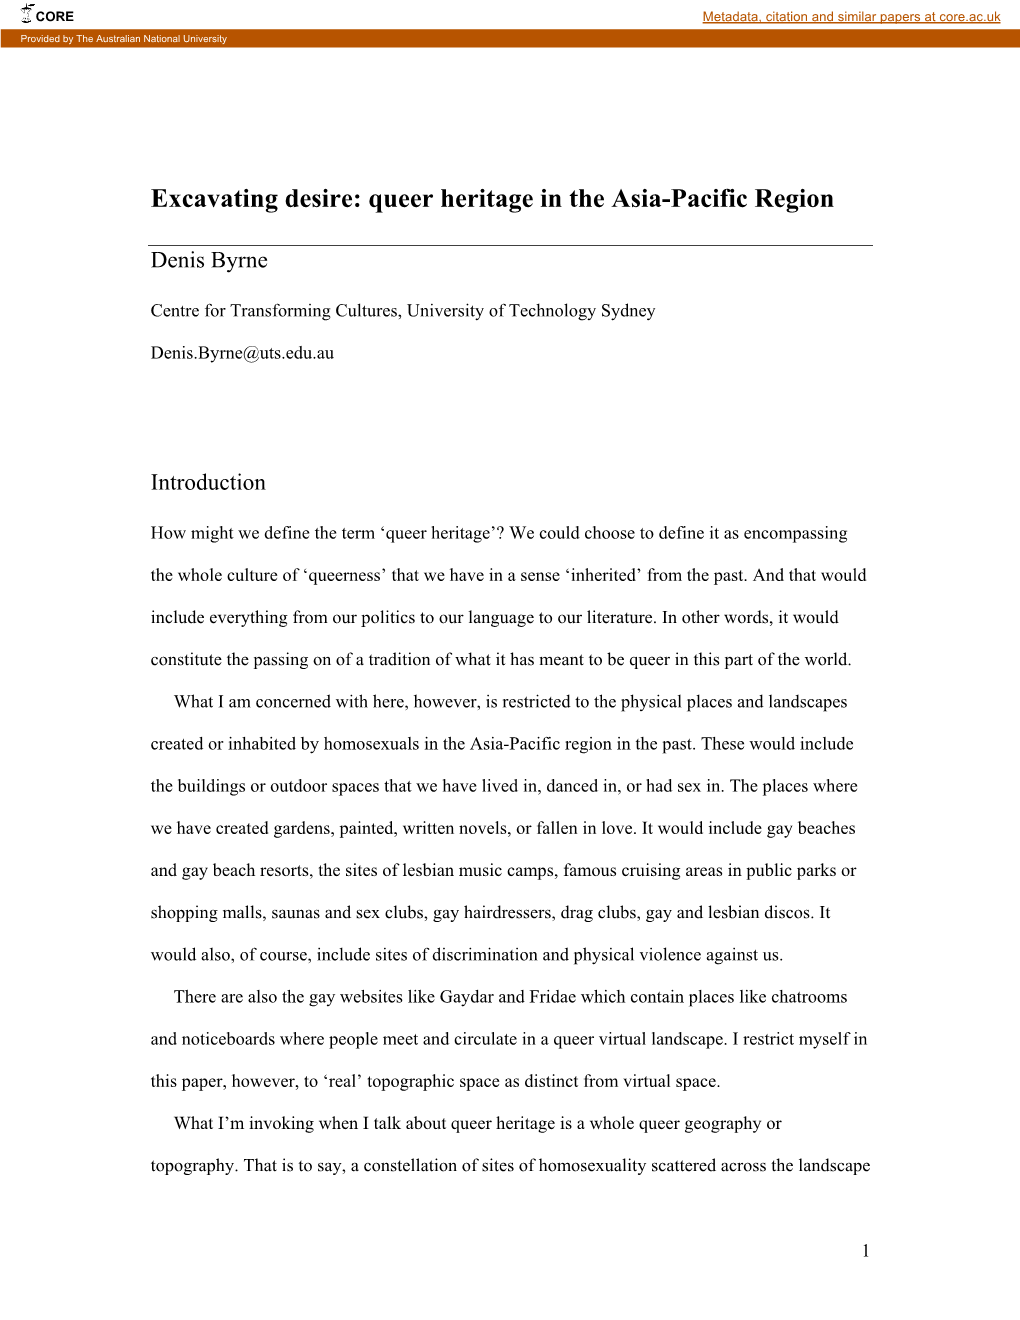 Excavating Desire: Queer Heritage in the Asia-Pacific Region